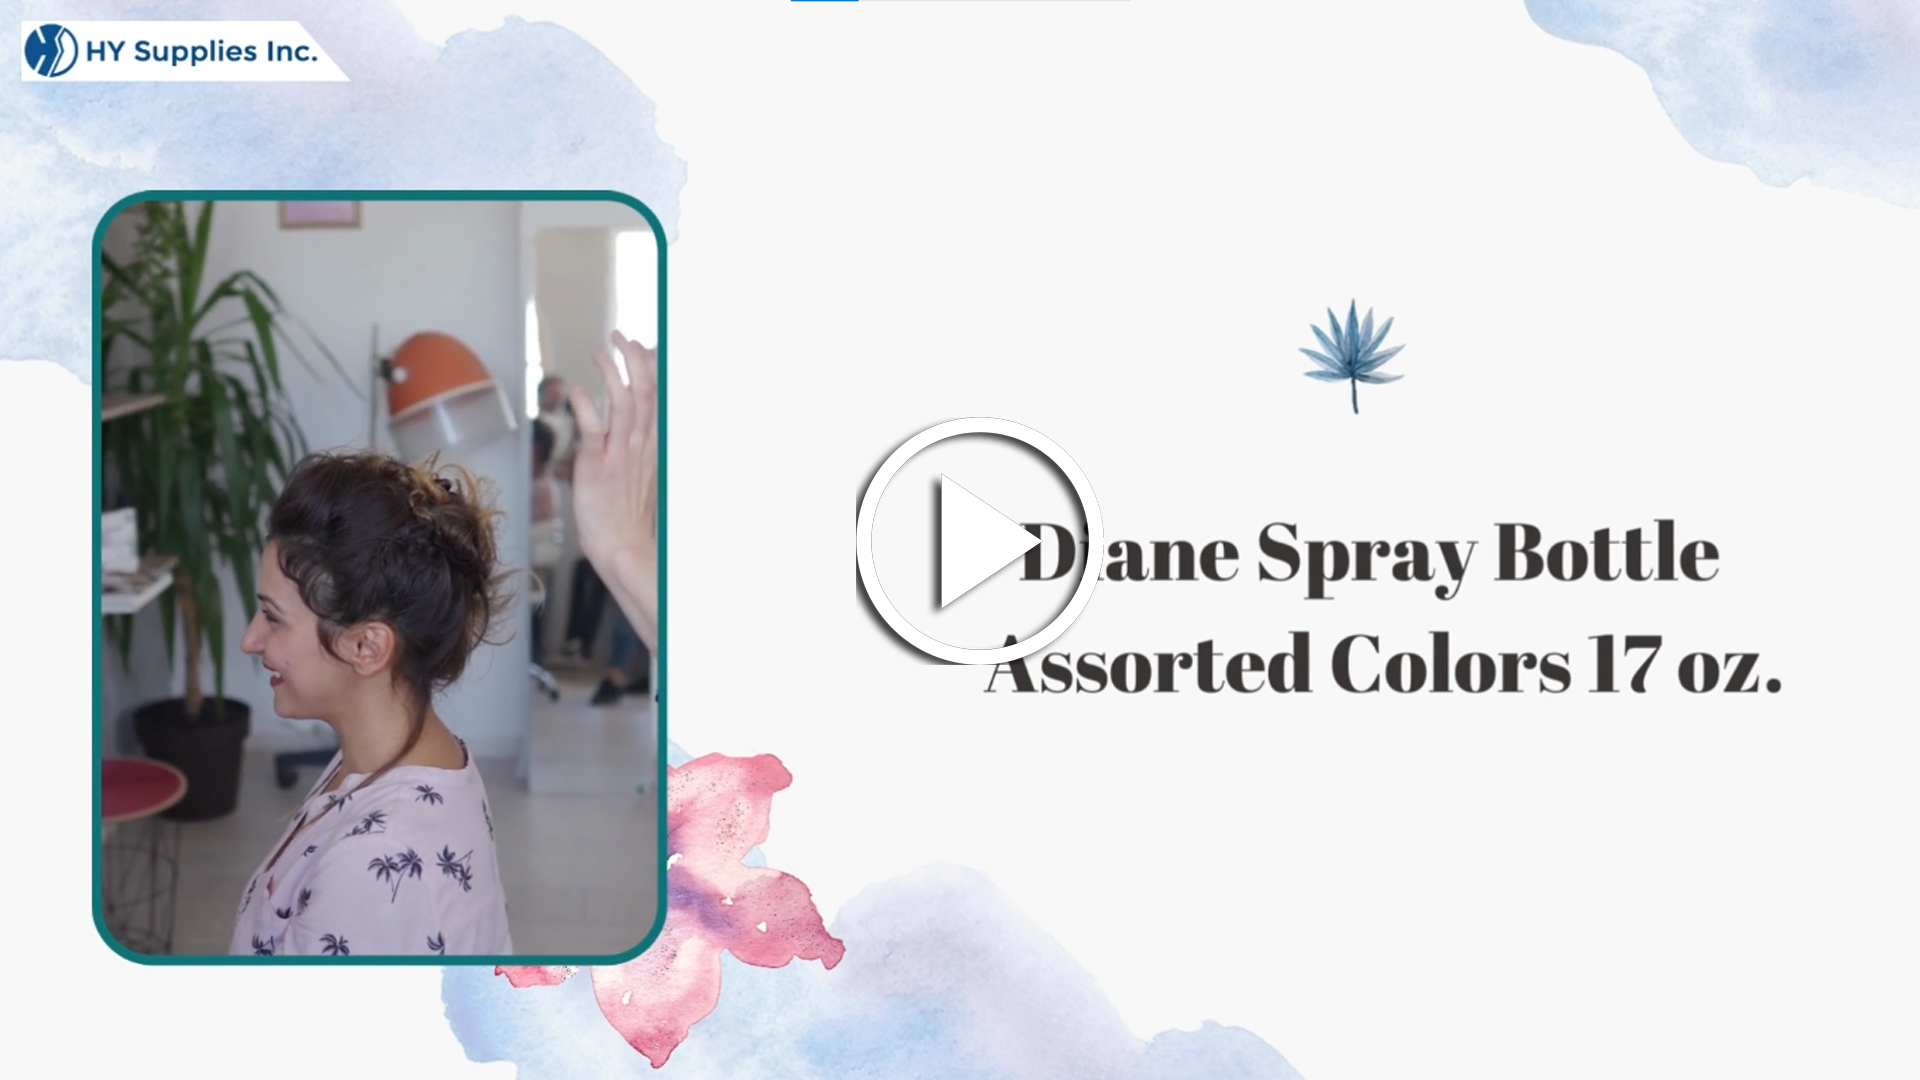 Diane Spray Bottle - Assorted Colors 17 oz.